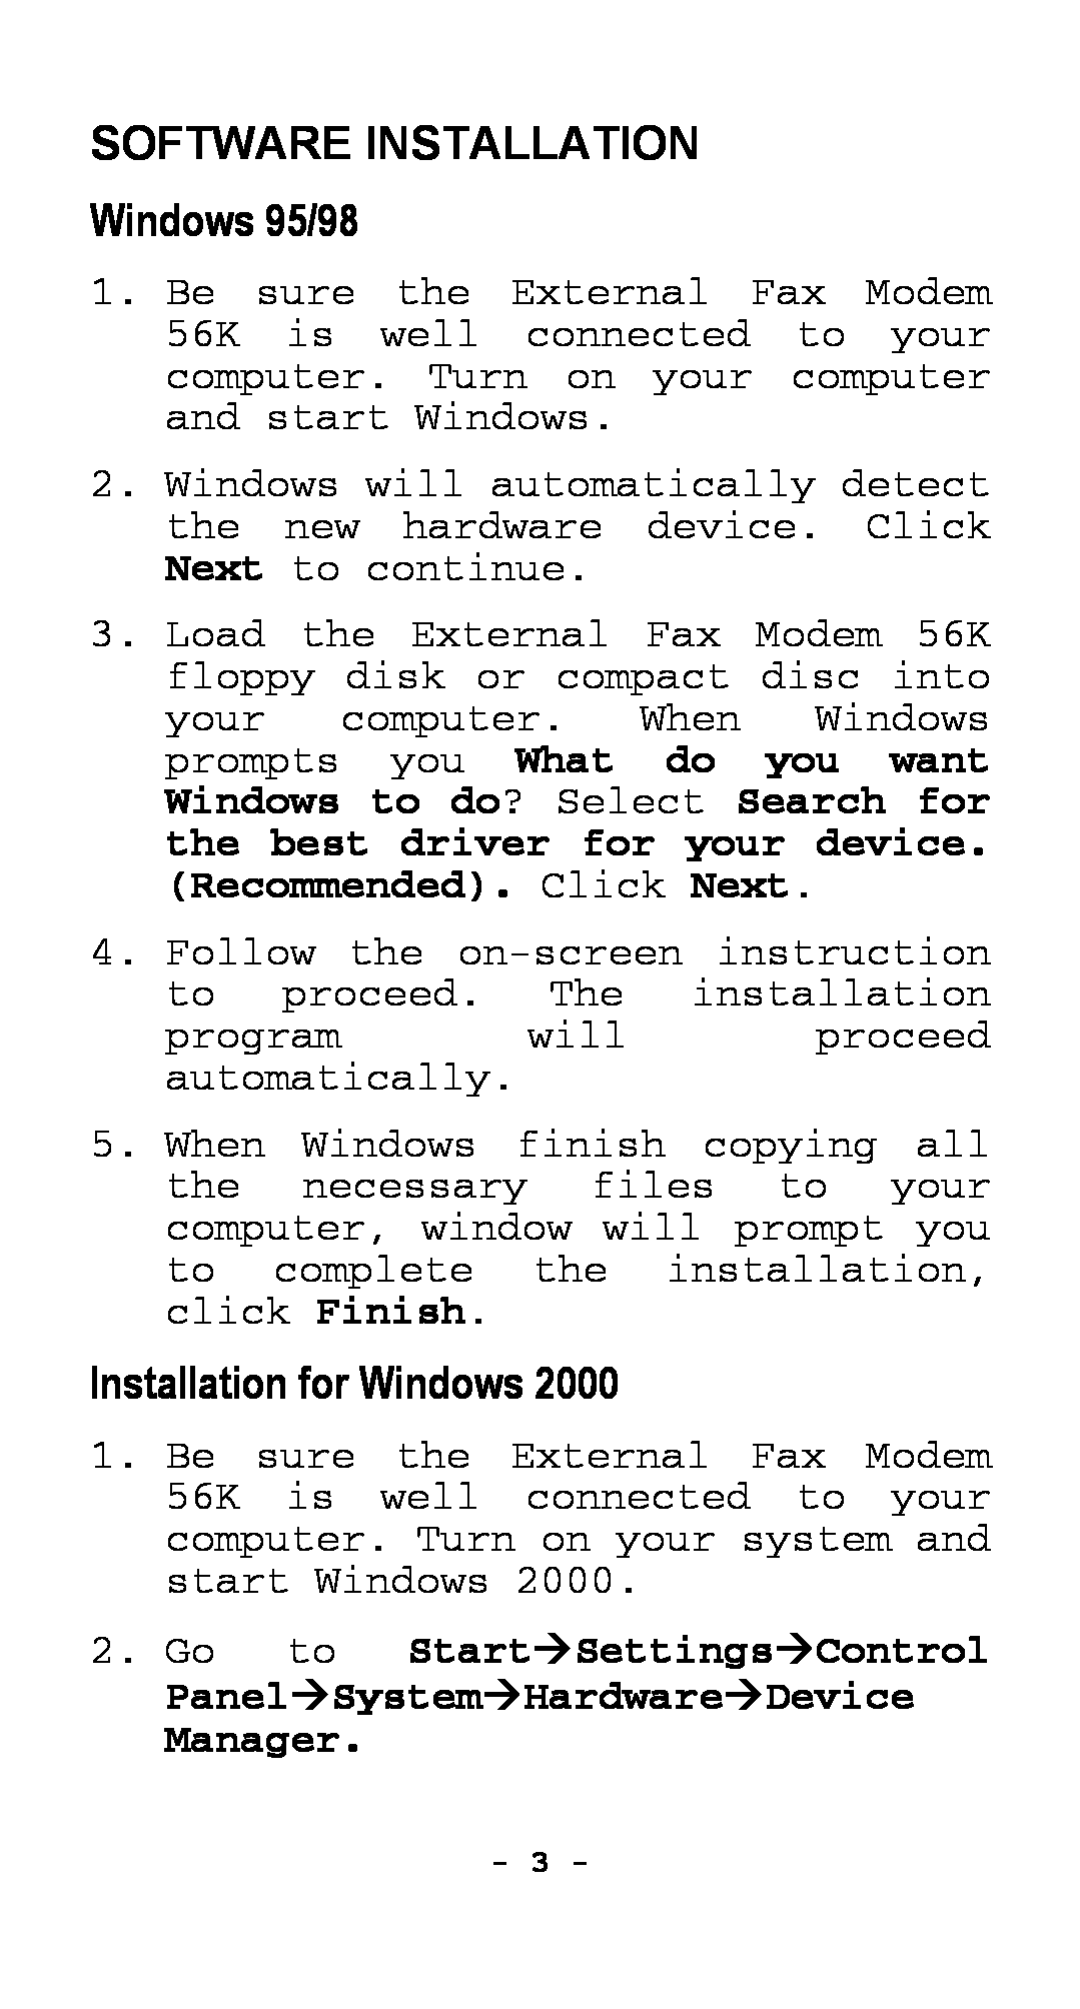 Abocom EFM560 manual SOFTWARE INSTALLATION Windows 95/98, Installation for Windows 